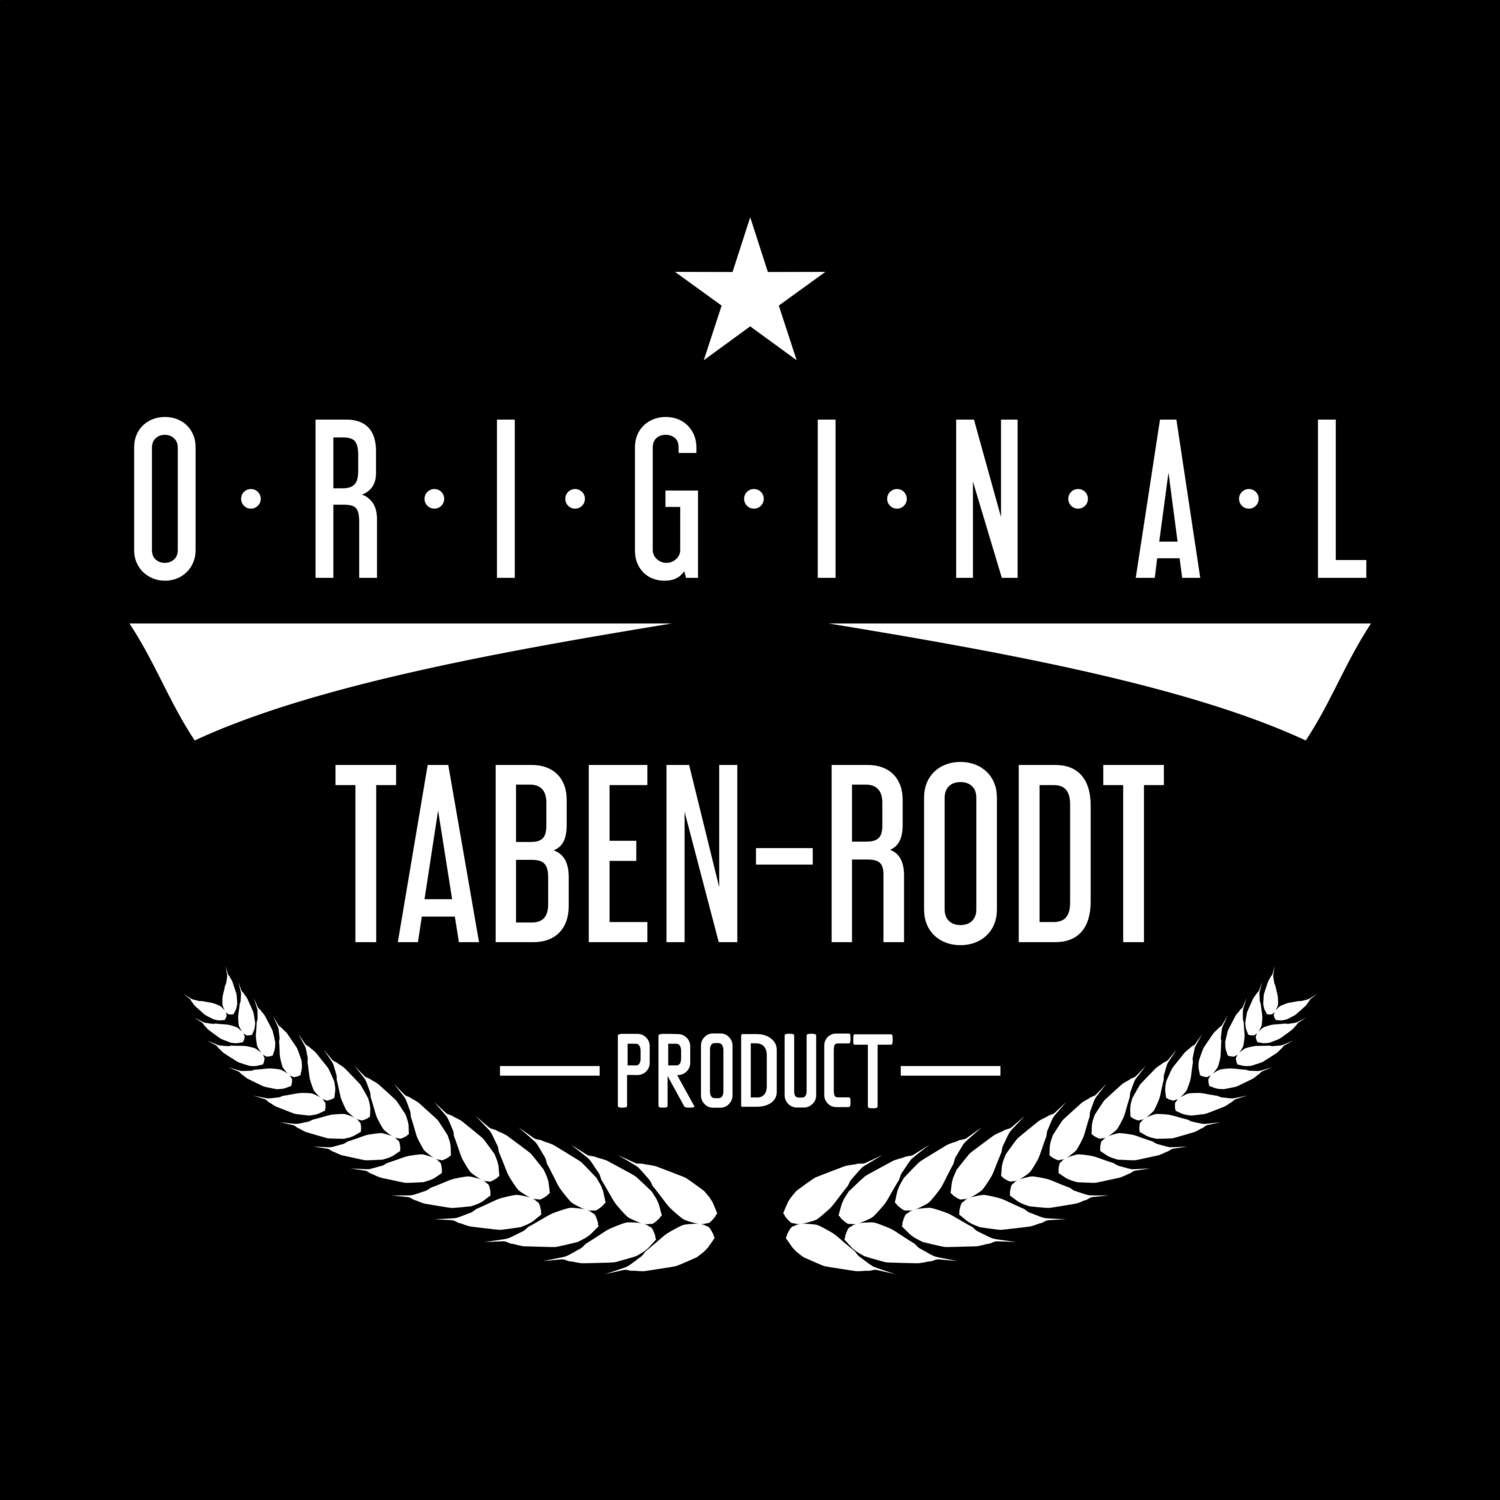 Taben-Rodt T-Shirt »Original Product«